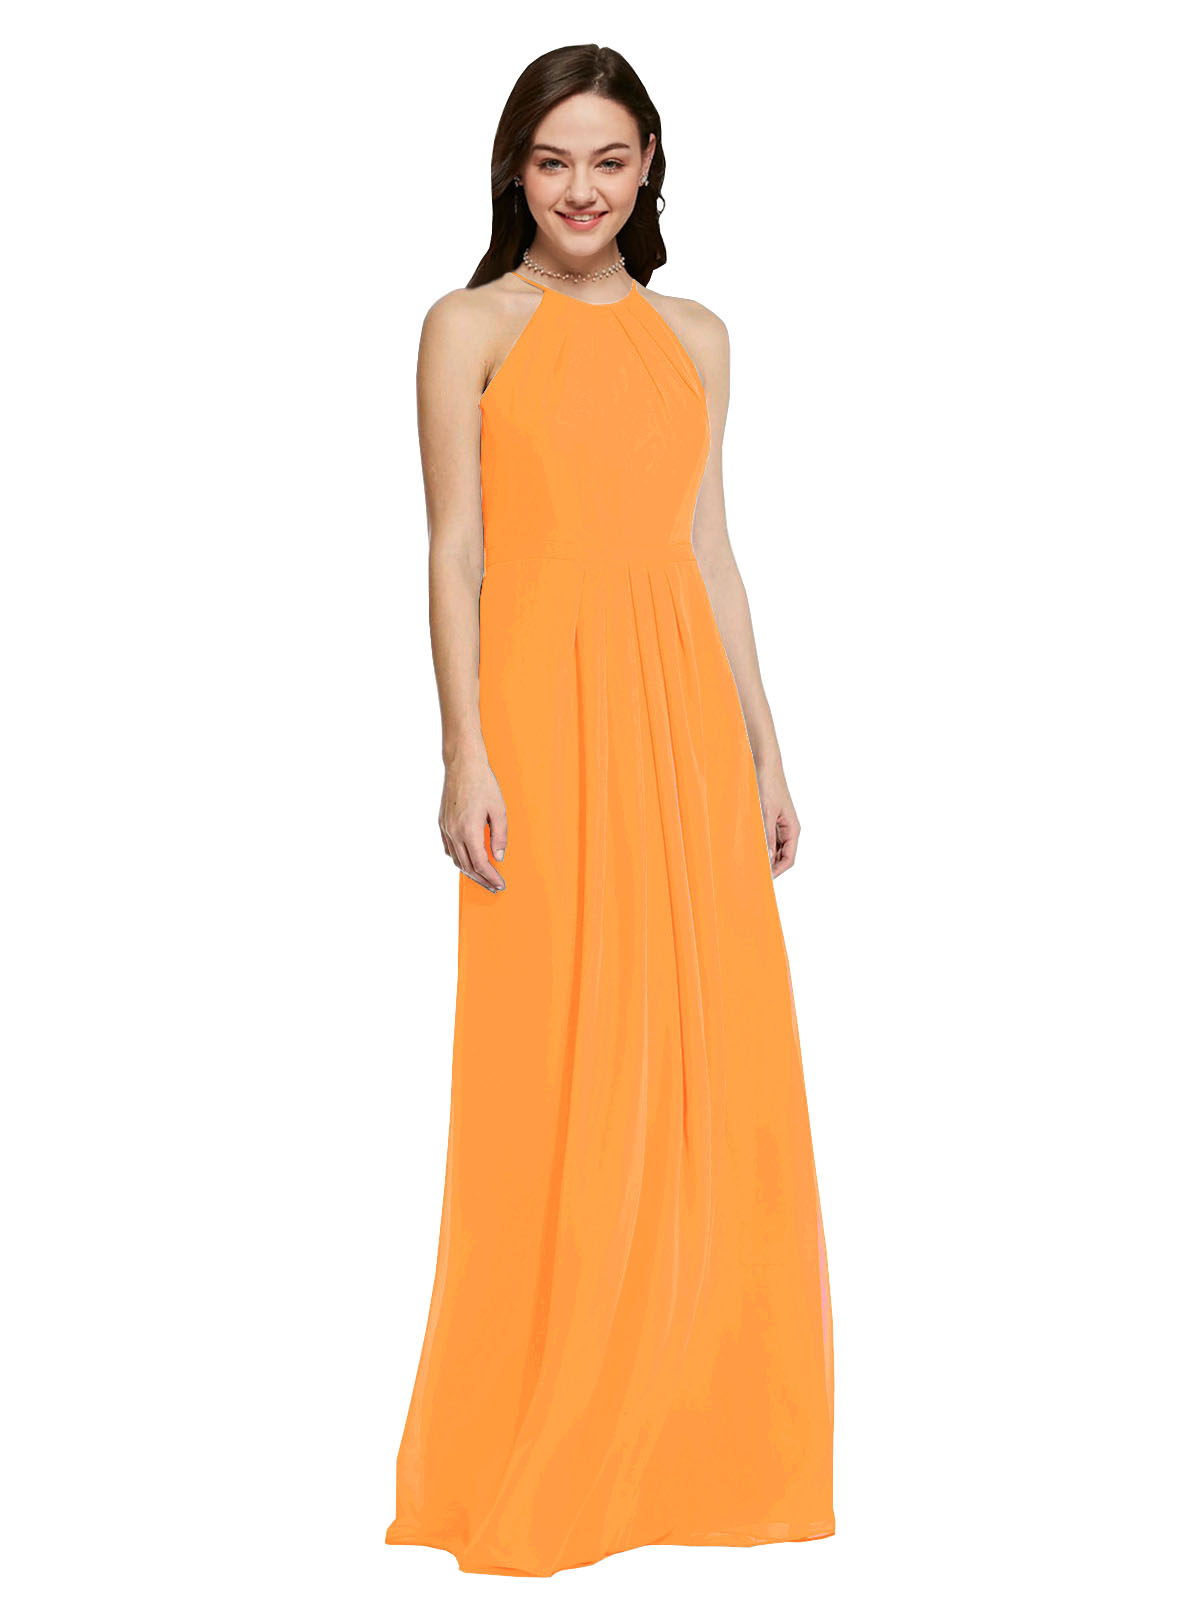 Long Sheath High Neck Halter Sleeveless Orange Chiffon Bridesmaid Dress Koloti